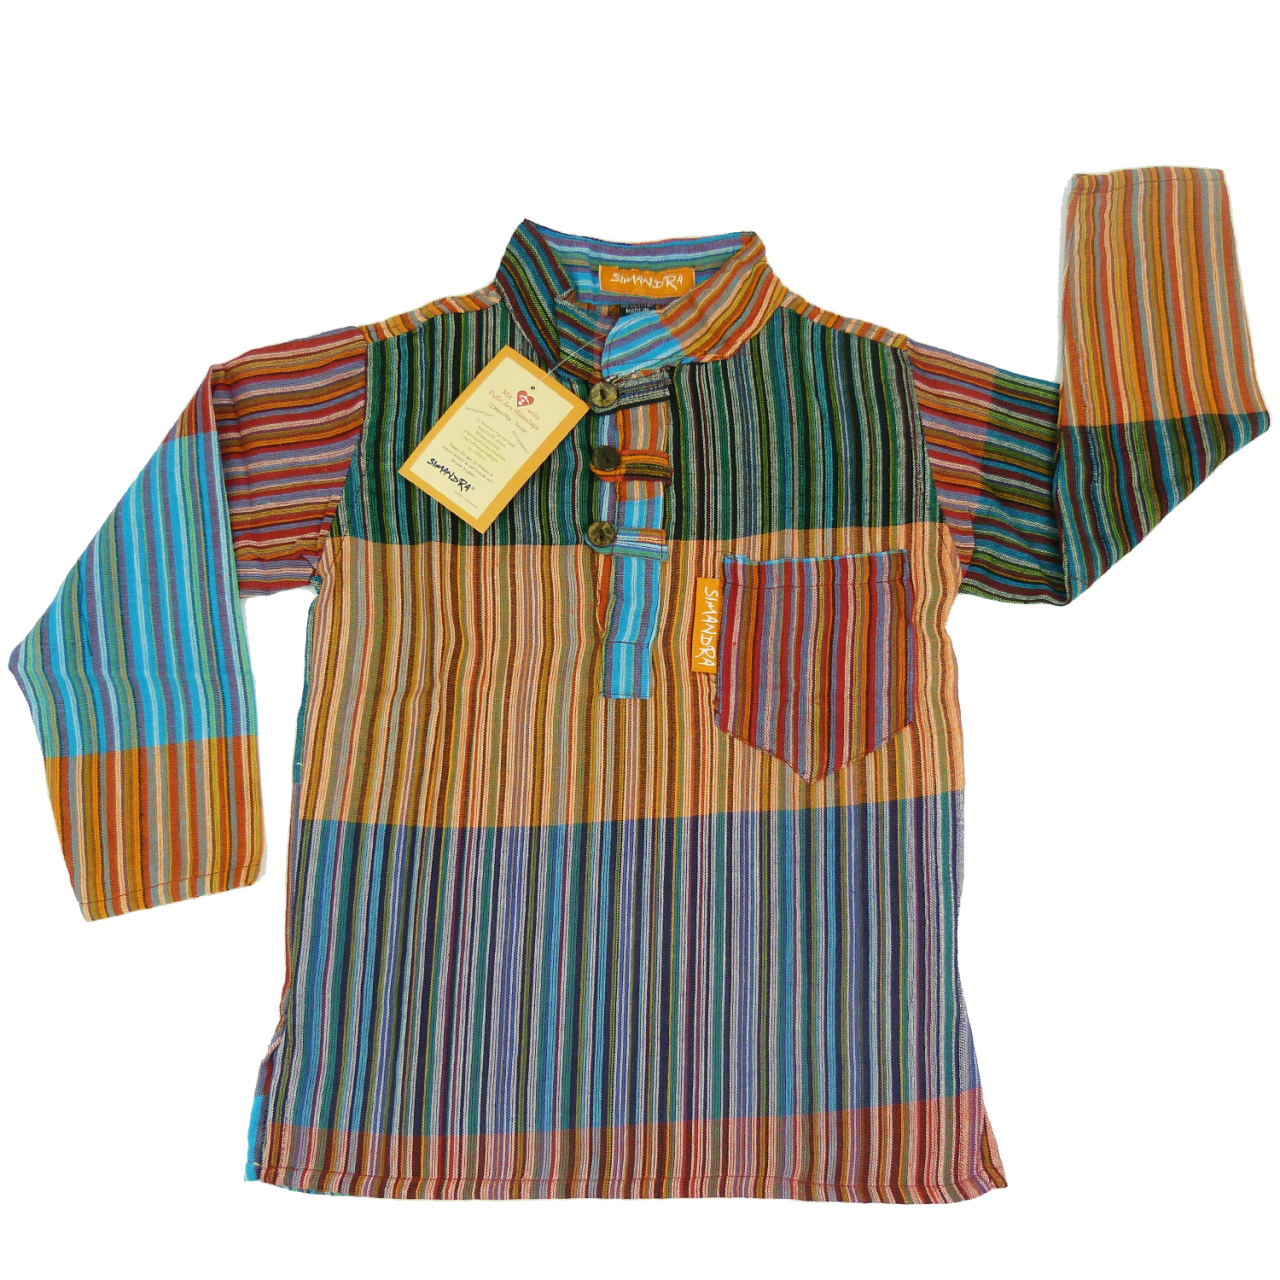 Kinder Patchworkhemd 'Karna' von Simandra - Hemd im Mittelalter-Stil